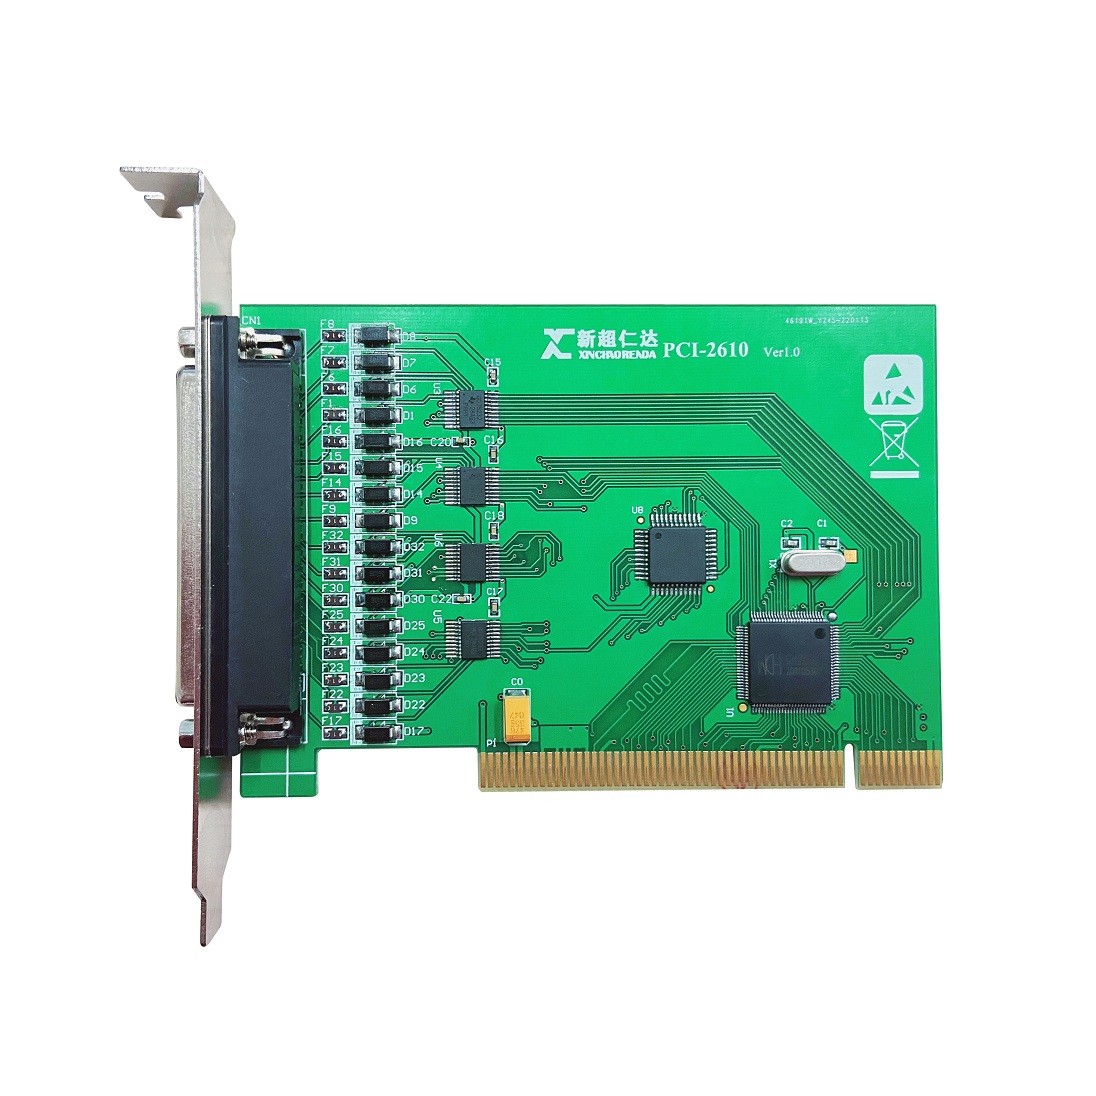 PCI-2610